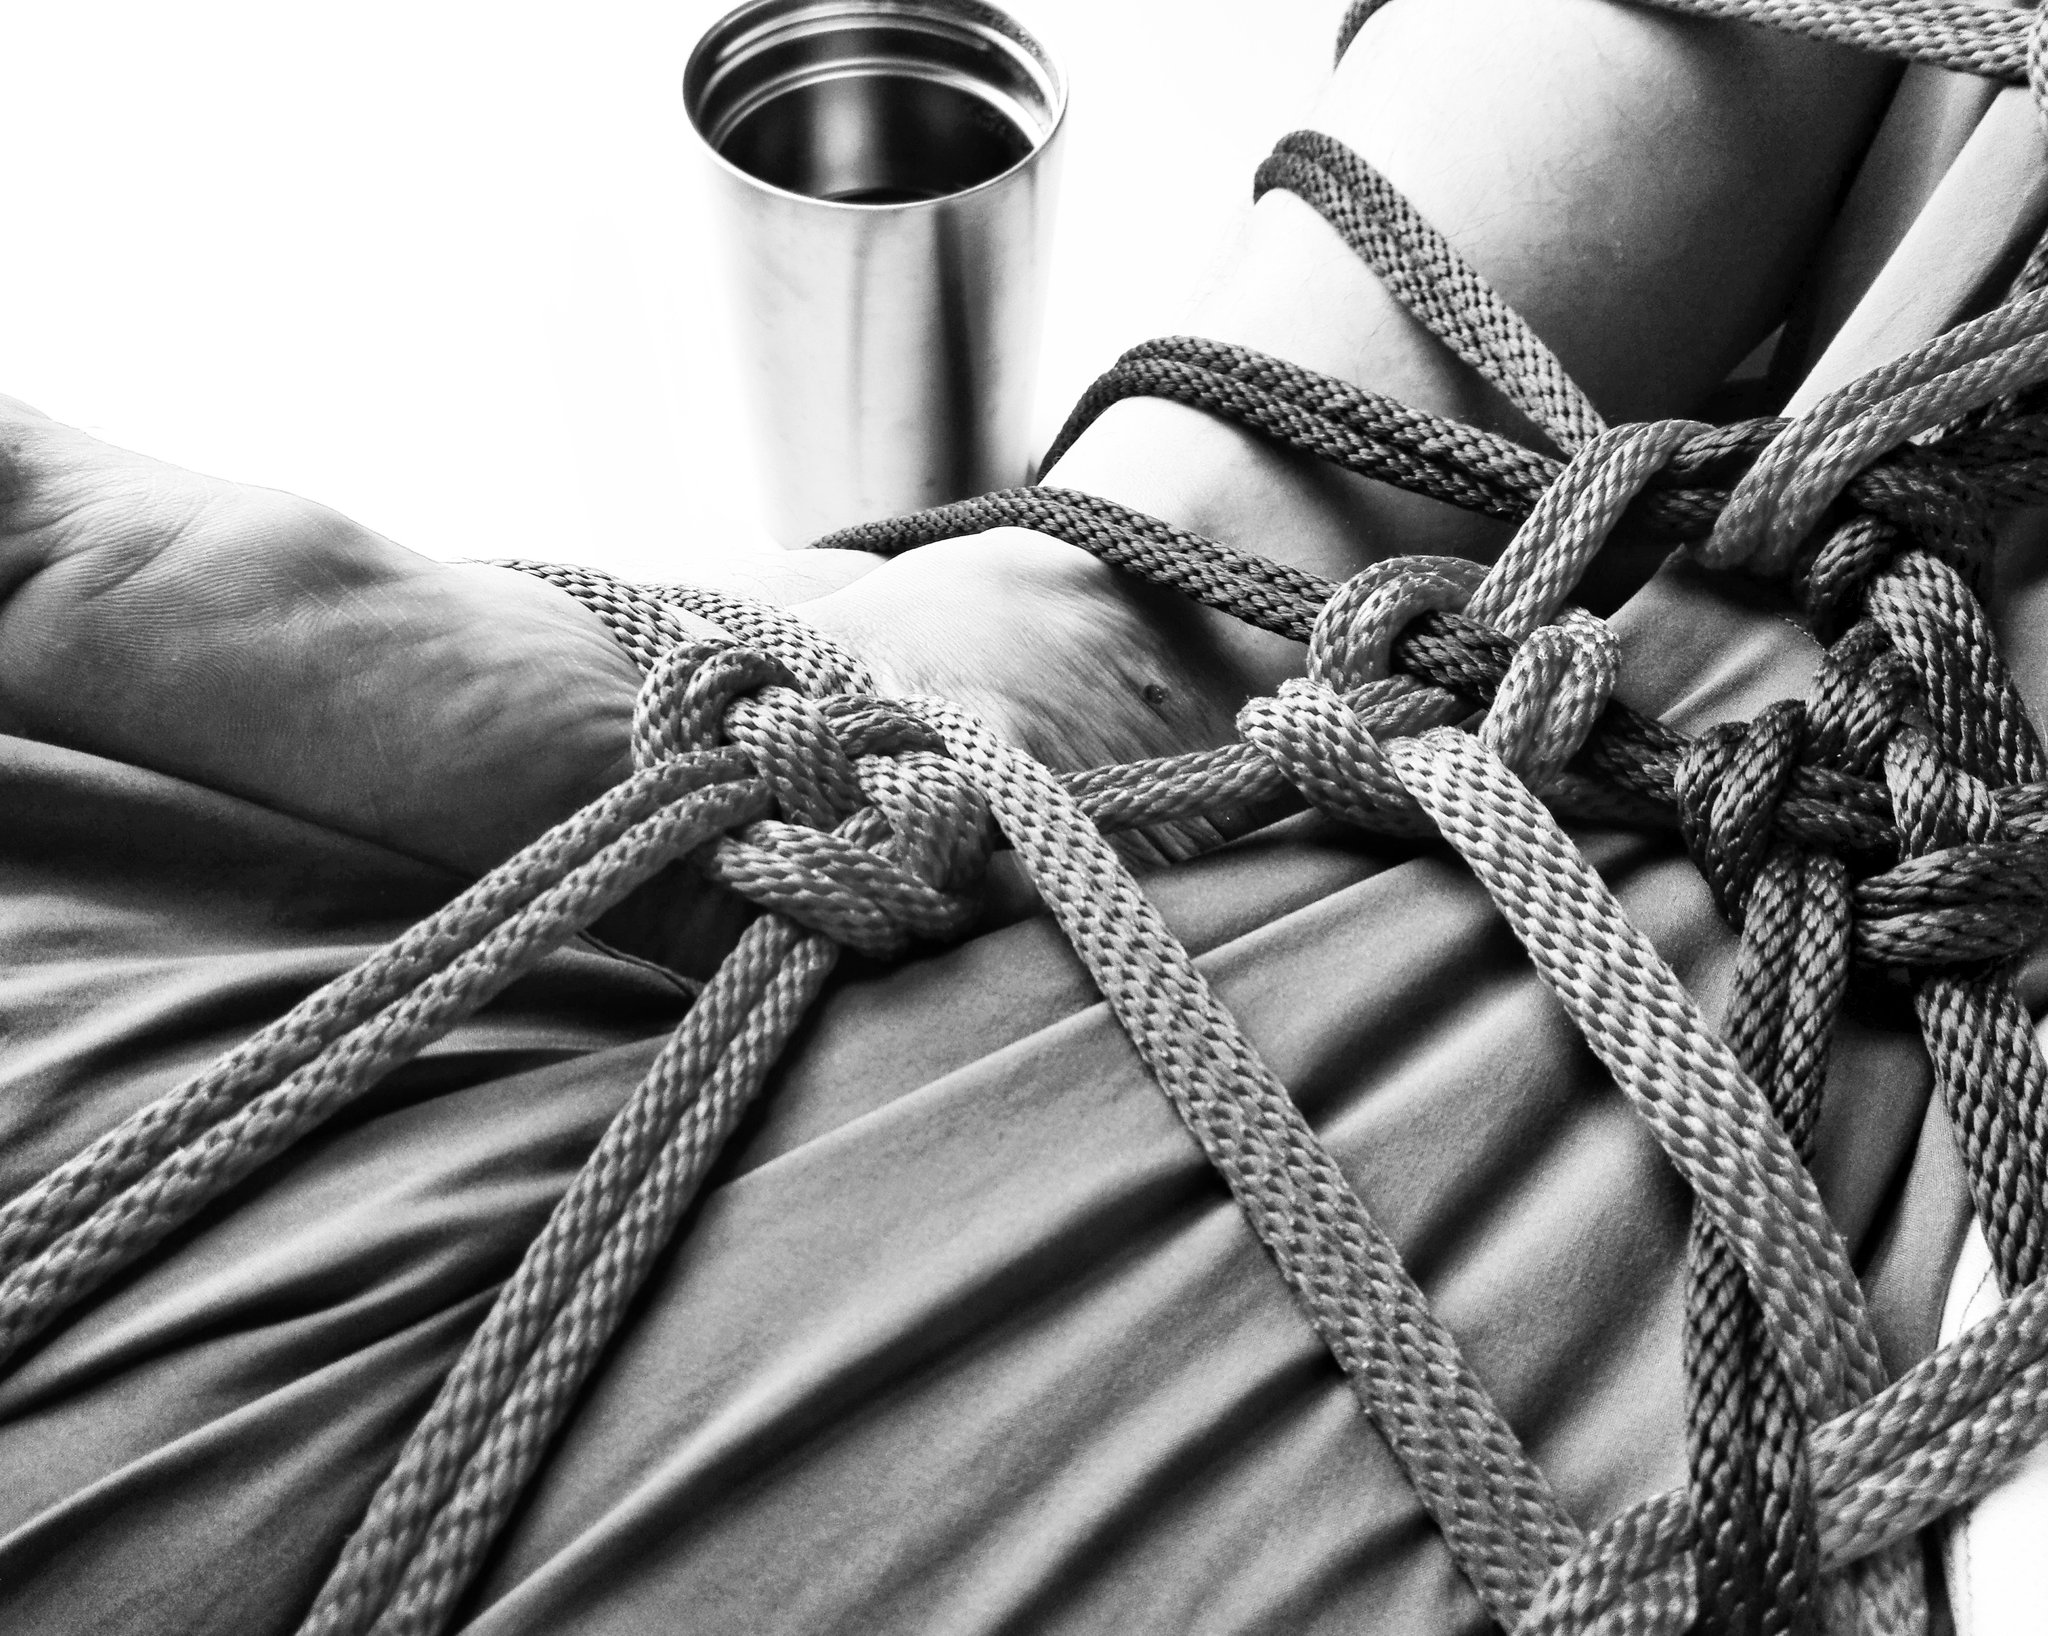 Topp (≧ ▽ ≦) Shibari ? на Твитеру: "Morning rope, long time no tie leg. 